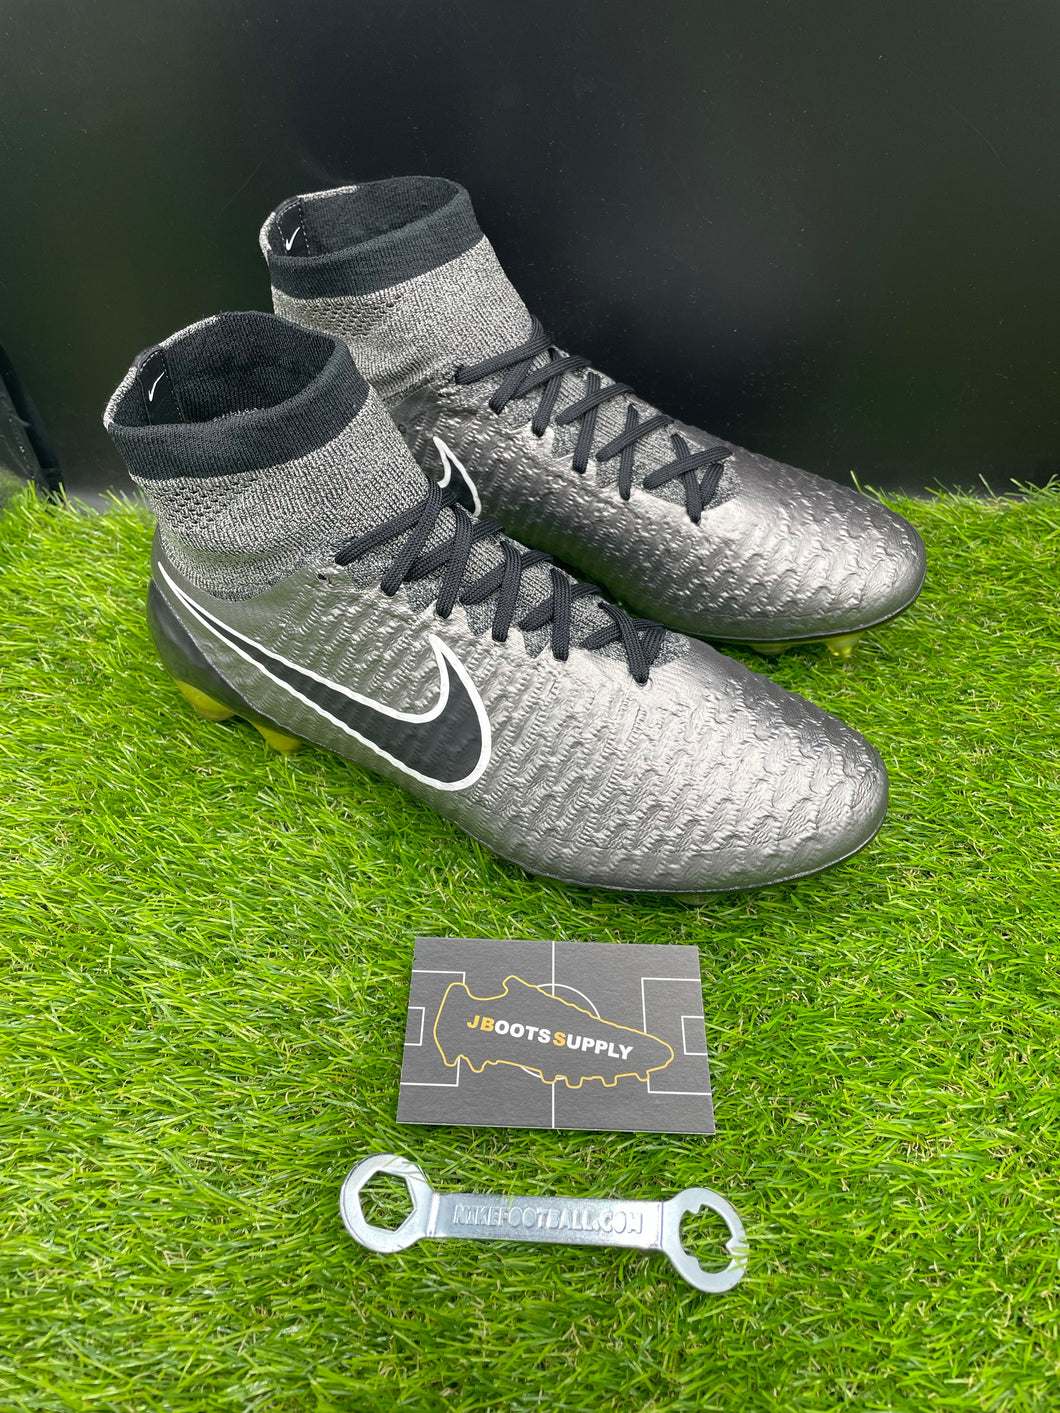 Nike Magista SG-Pro JBootsSupply